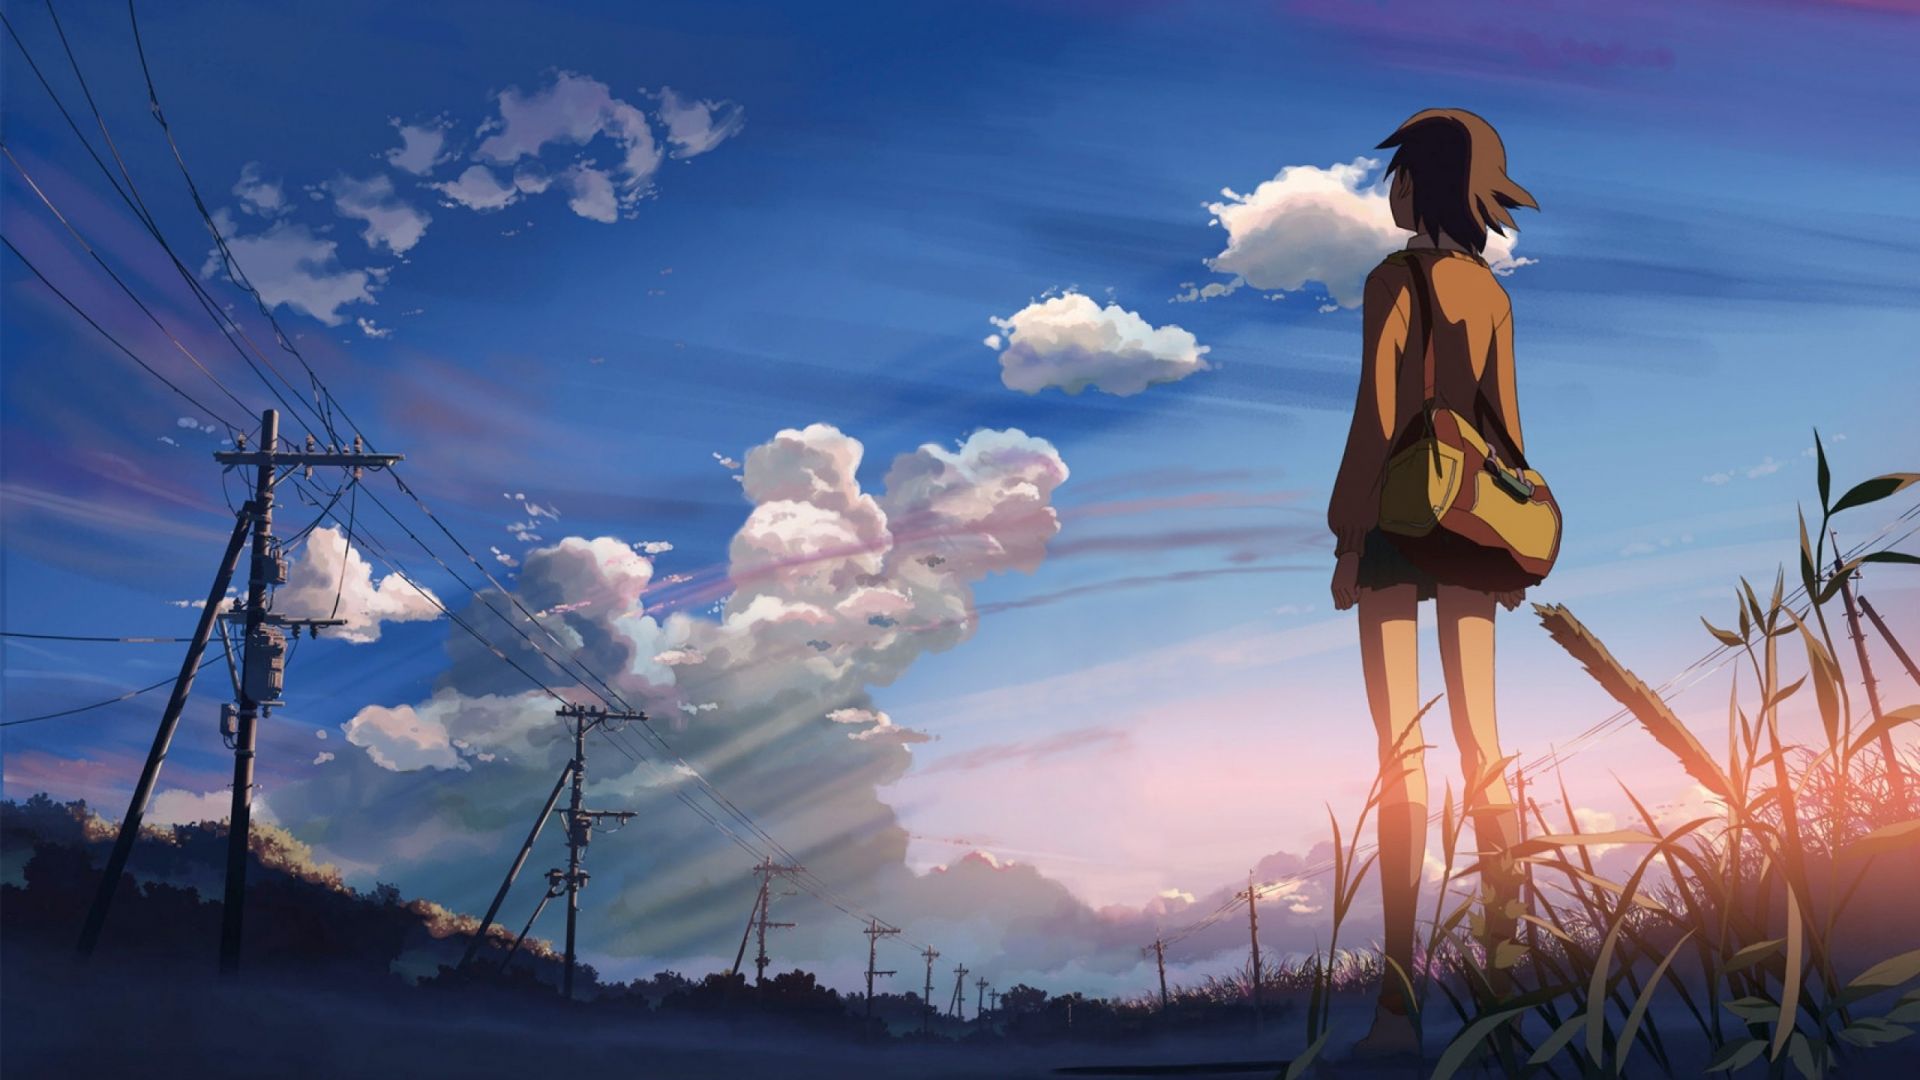 Wallpaper Makoto shinkai from 5 centimeters per second anime movie